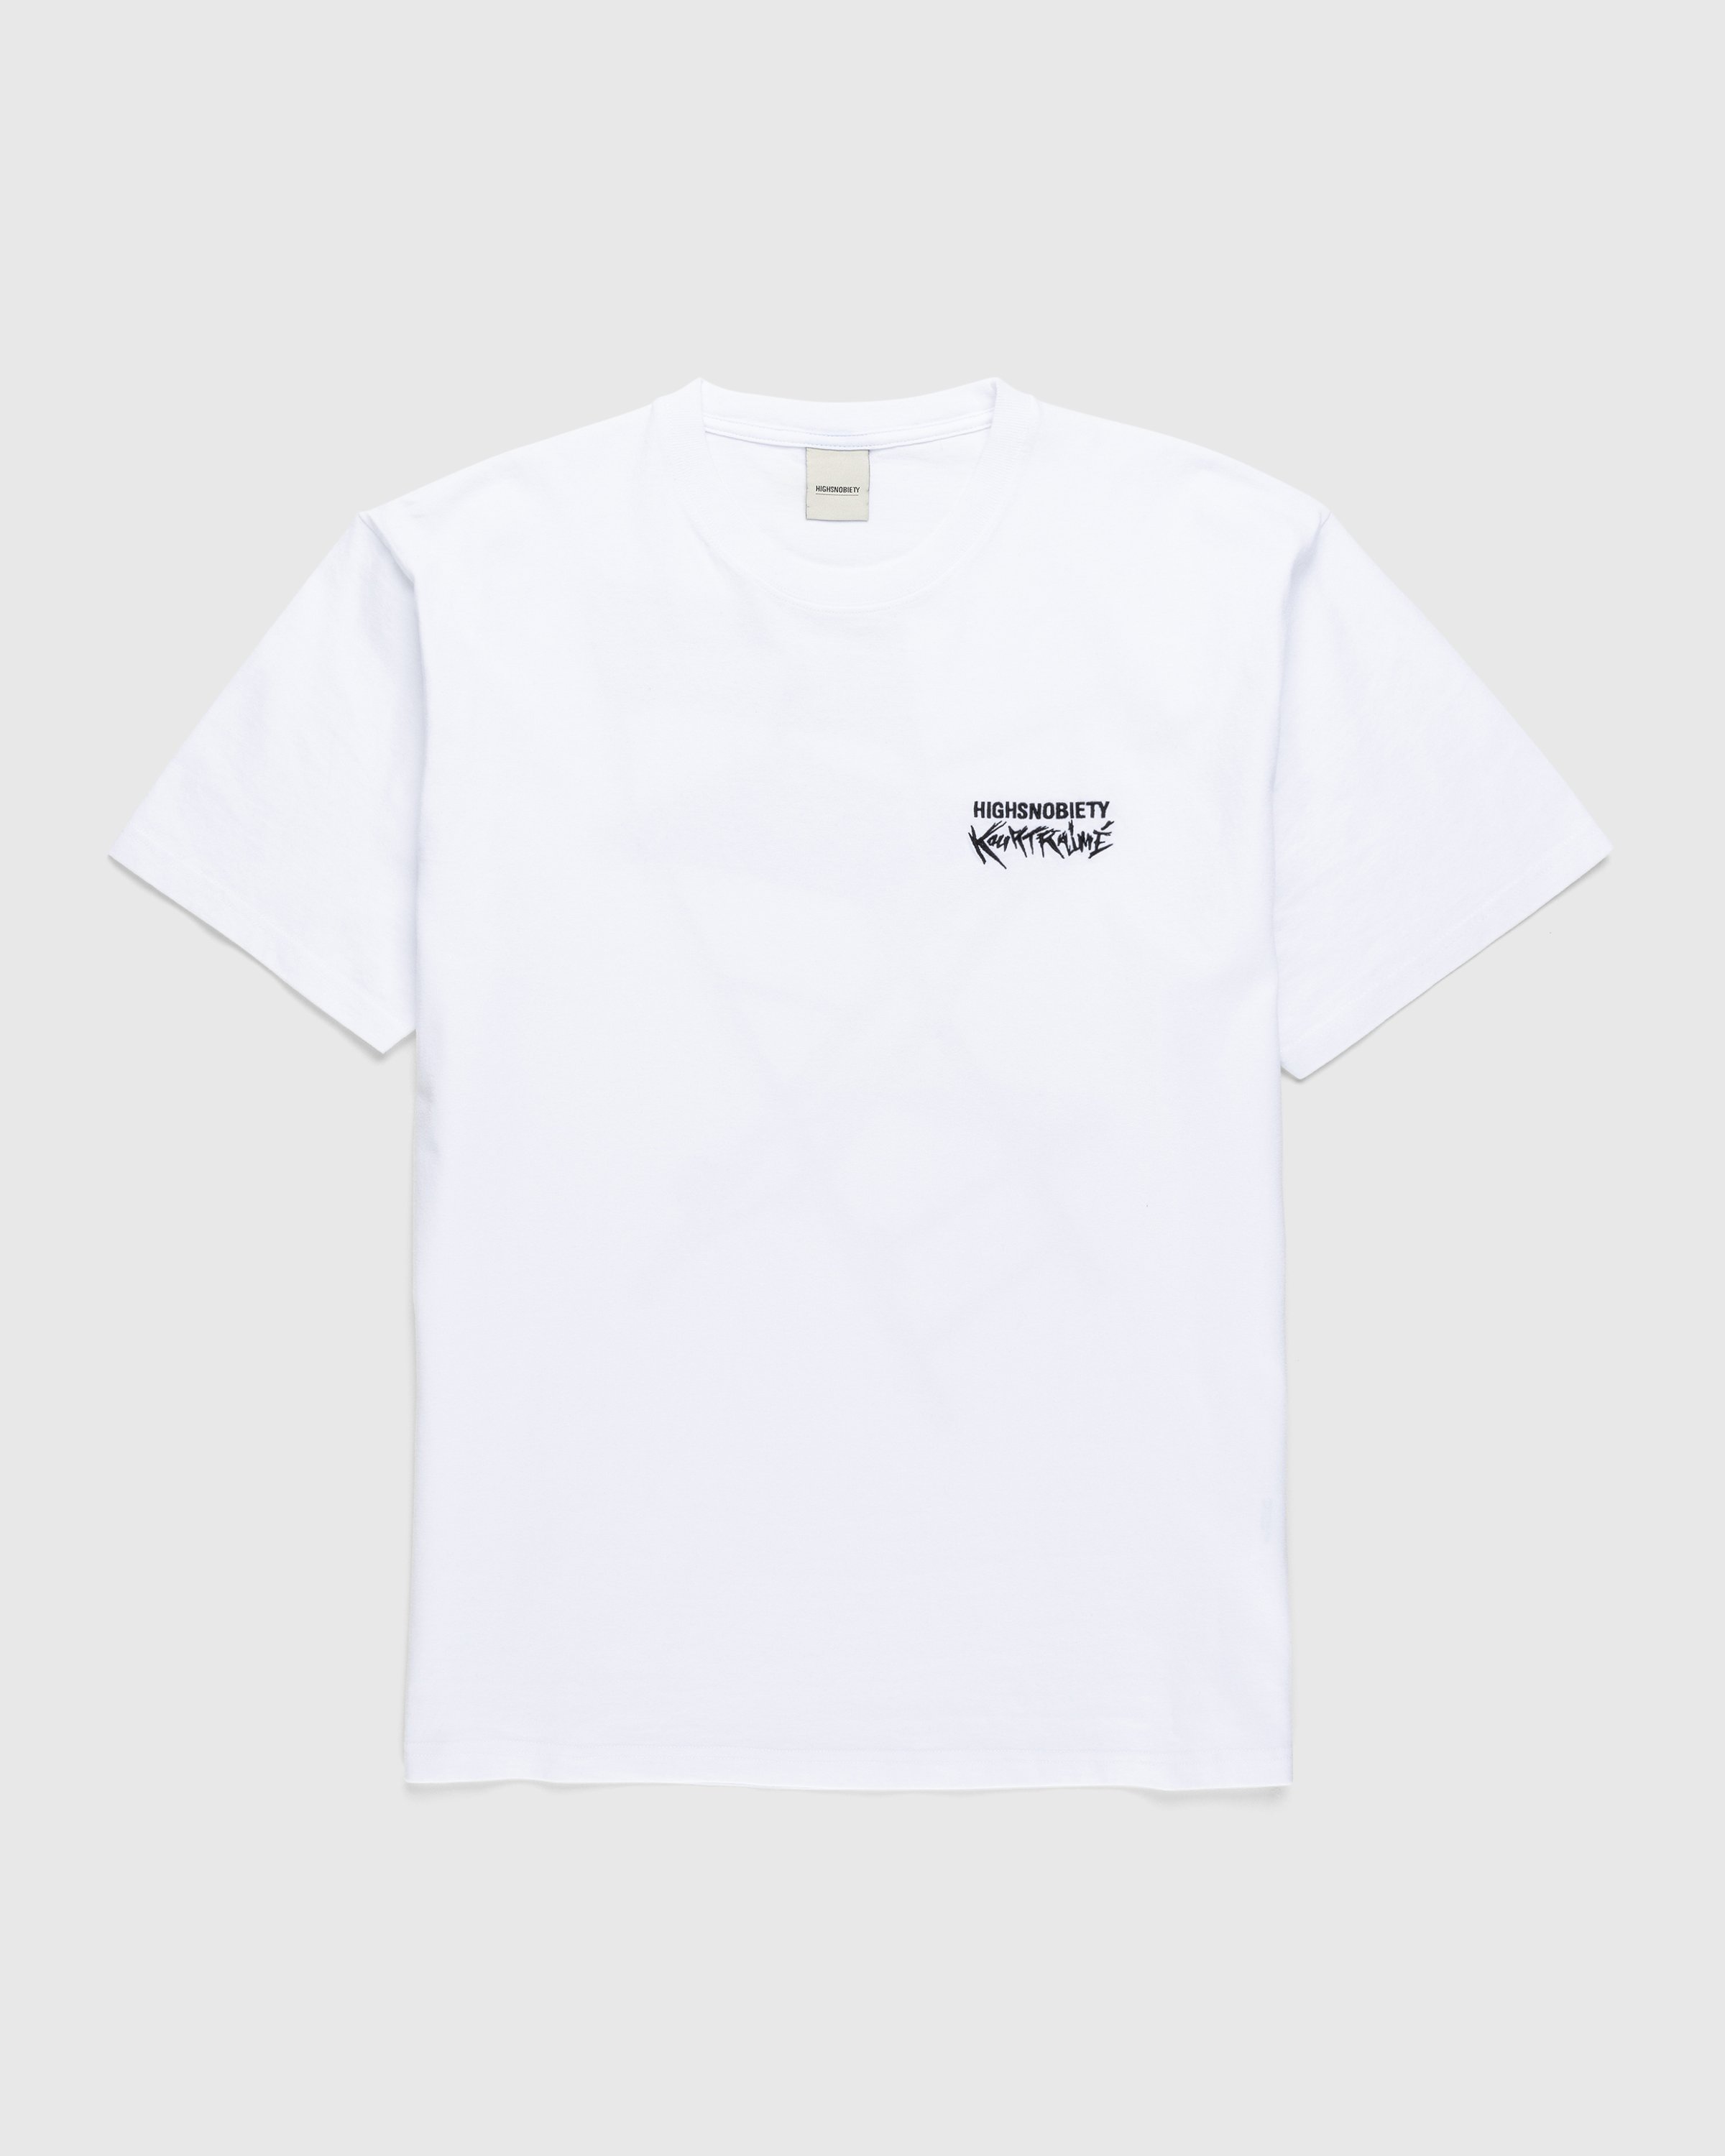 École Kourtrajmé x Highsnobiety - Short Sleeve T-Shirt White - Clothing - White - Image 2